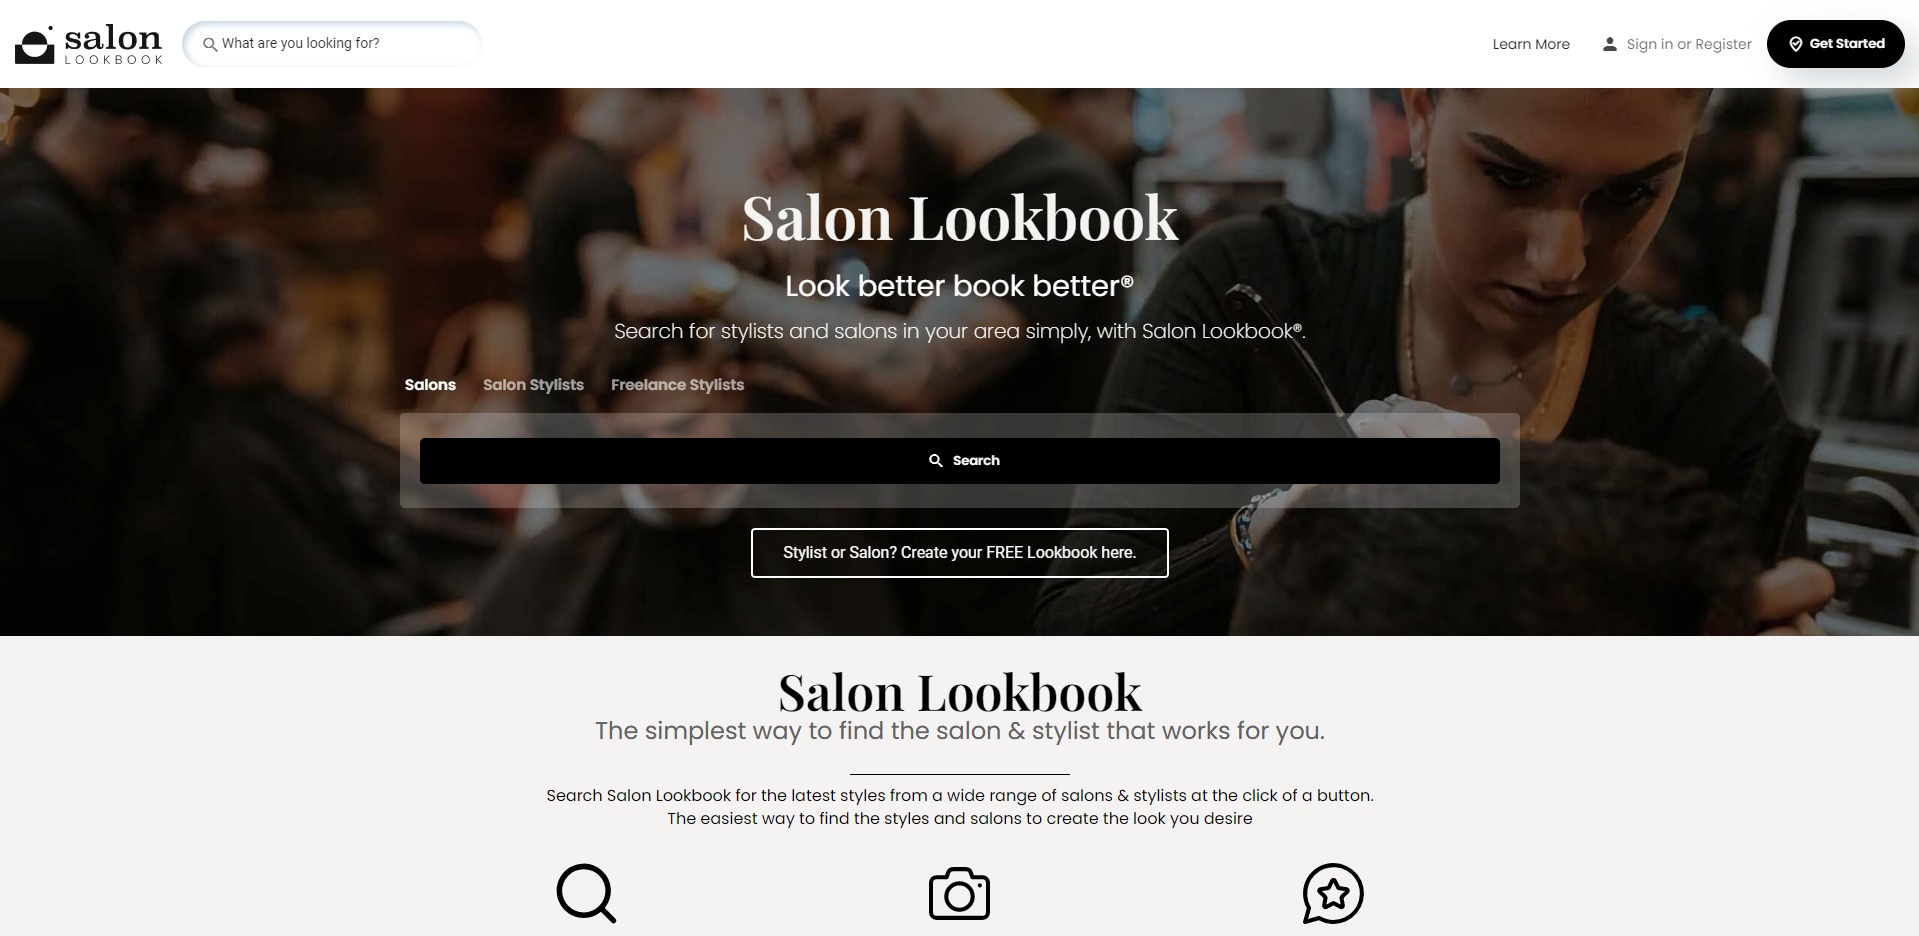 Salon Lookbook